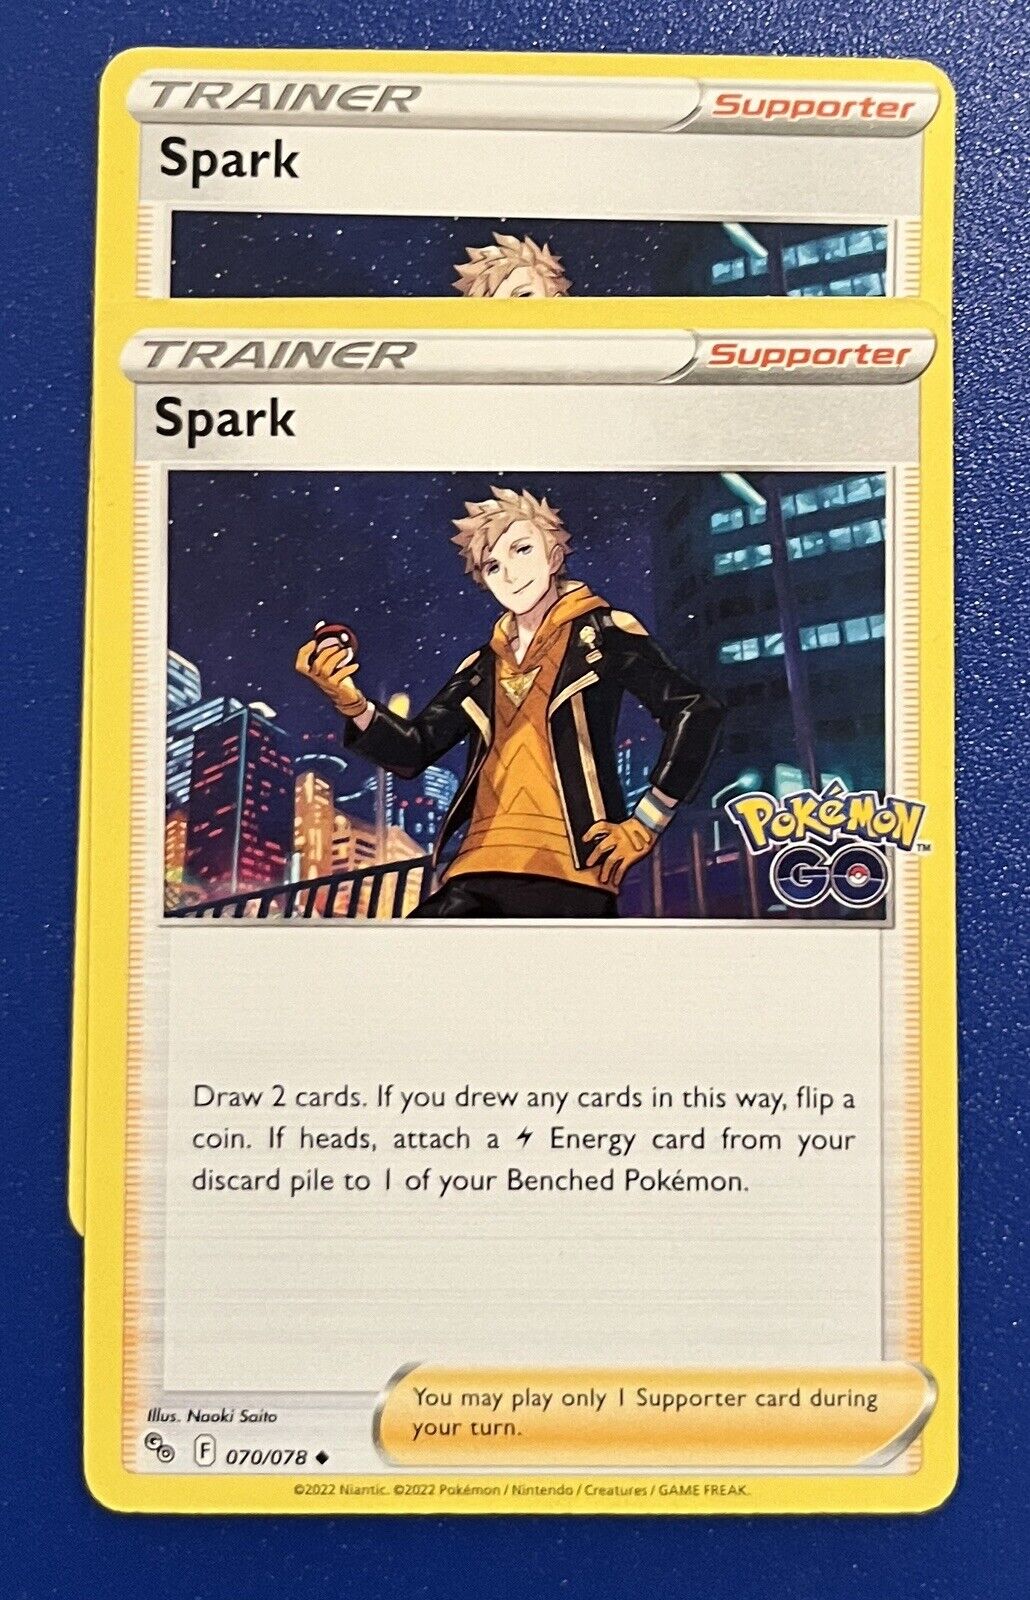 2x Pokémon TCG Spark Pokémon GO 070/078 Uncommon